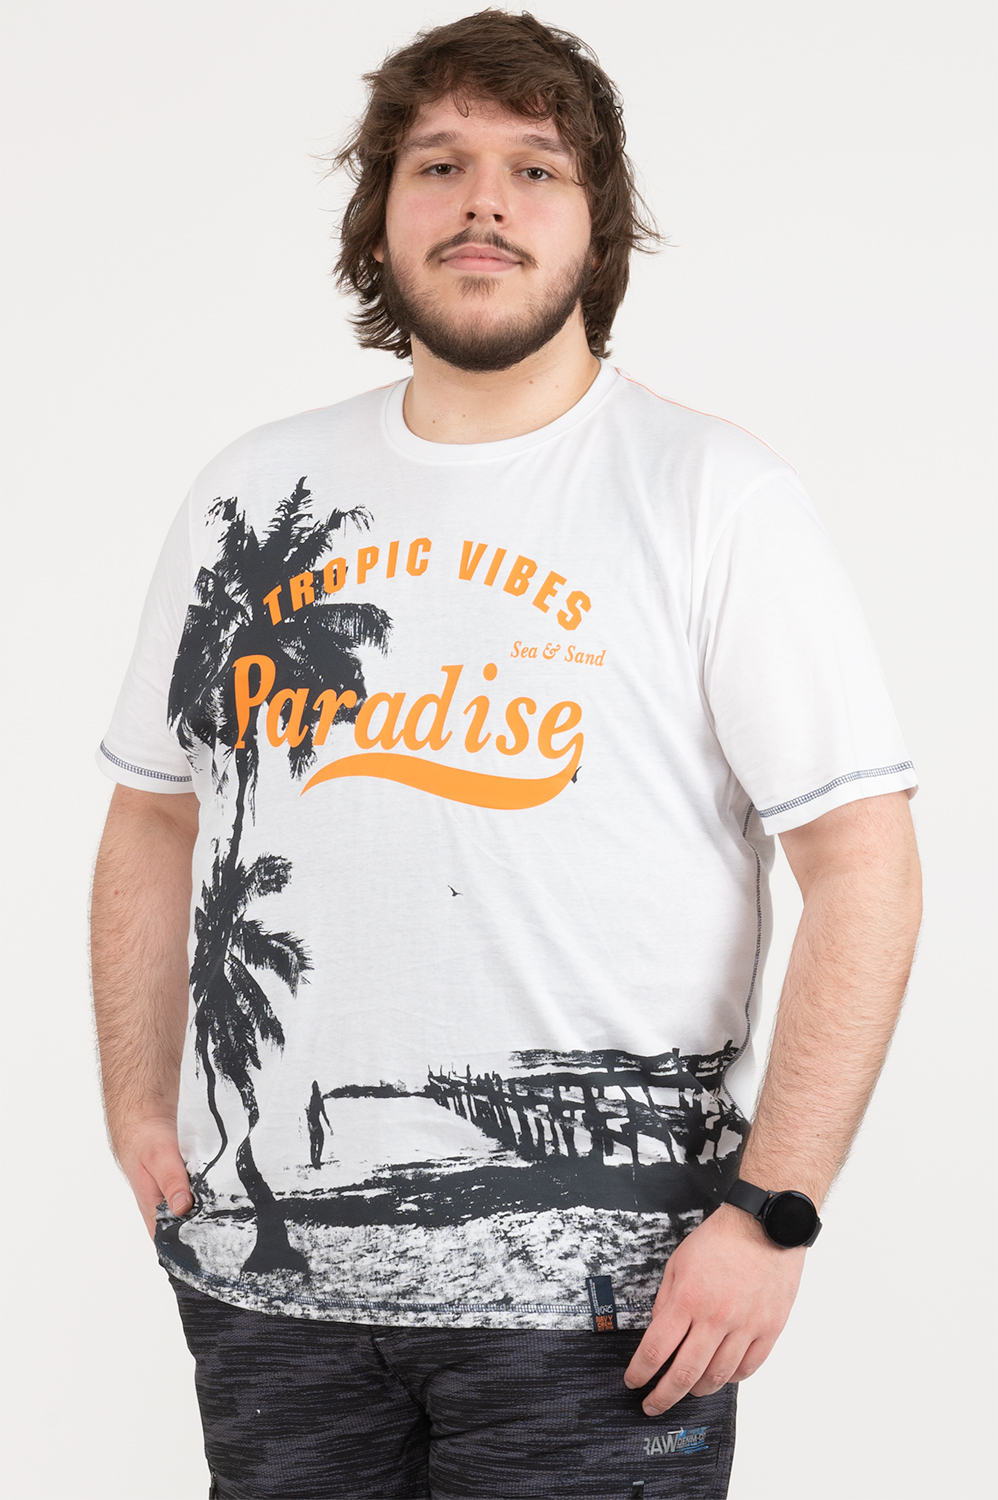 Tropical Vibes Paradise, short sleeve graphic t-shirt - White - Plus Size